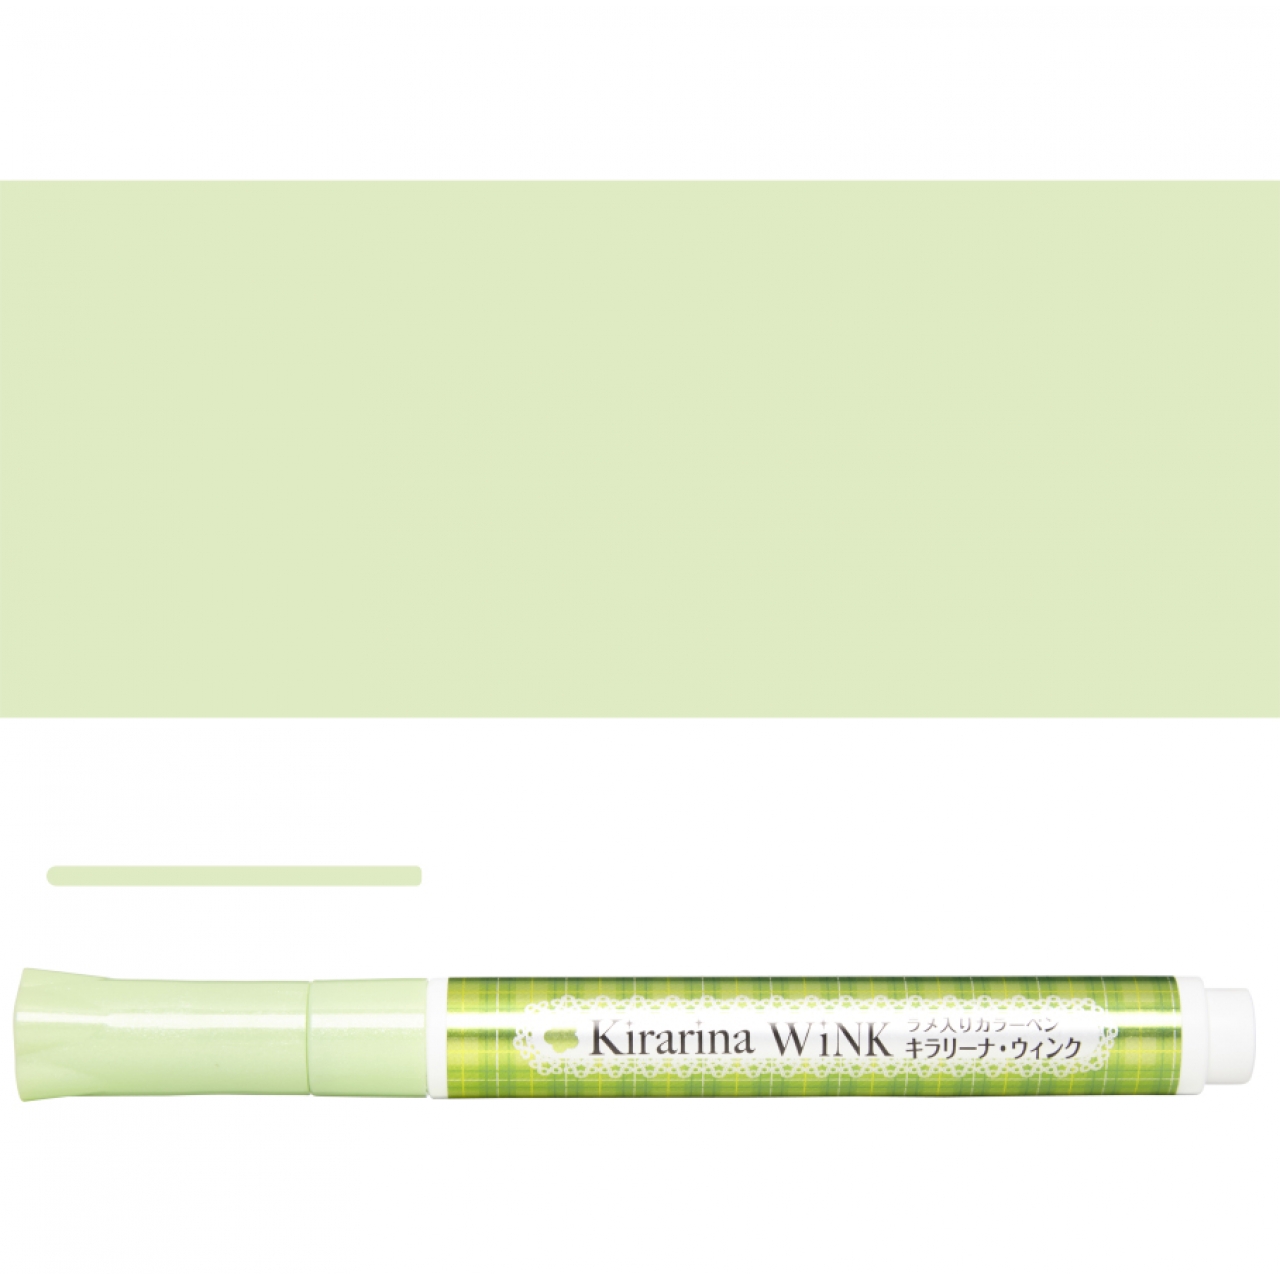 Kirarina WINK - Lime Green